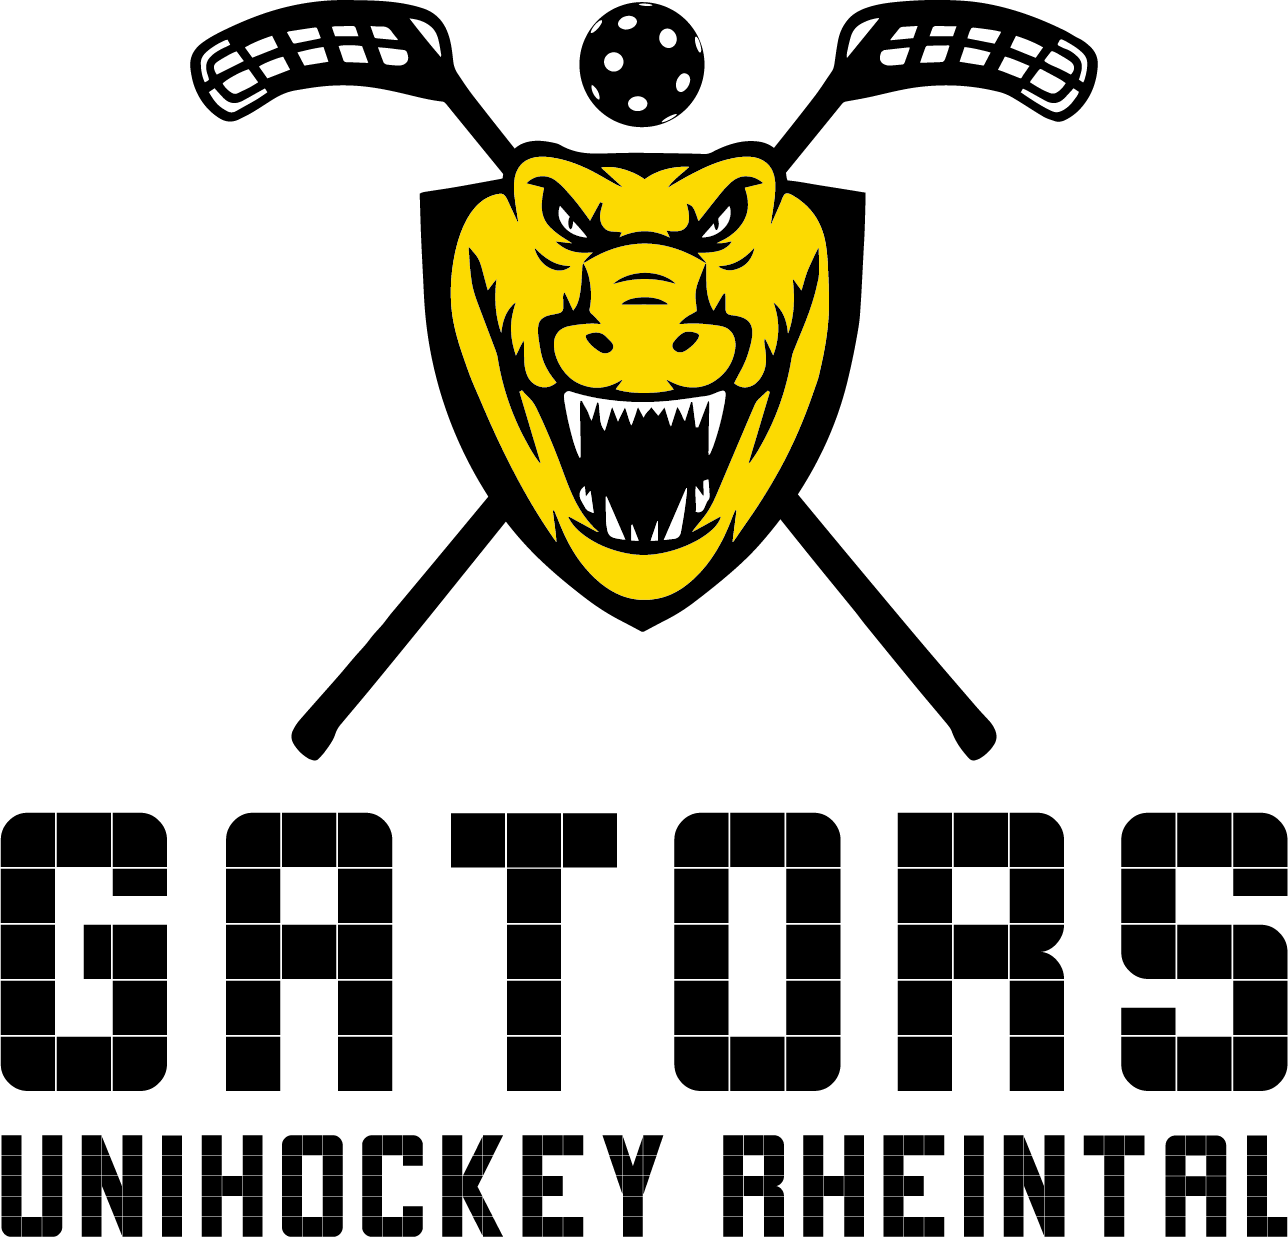 gators logo2019 neg